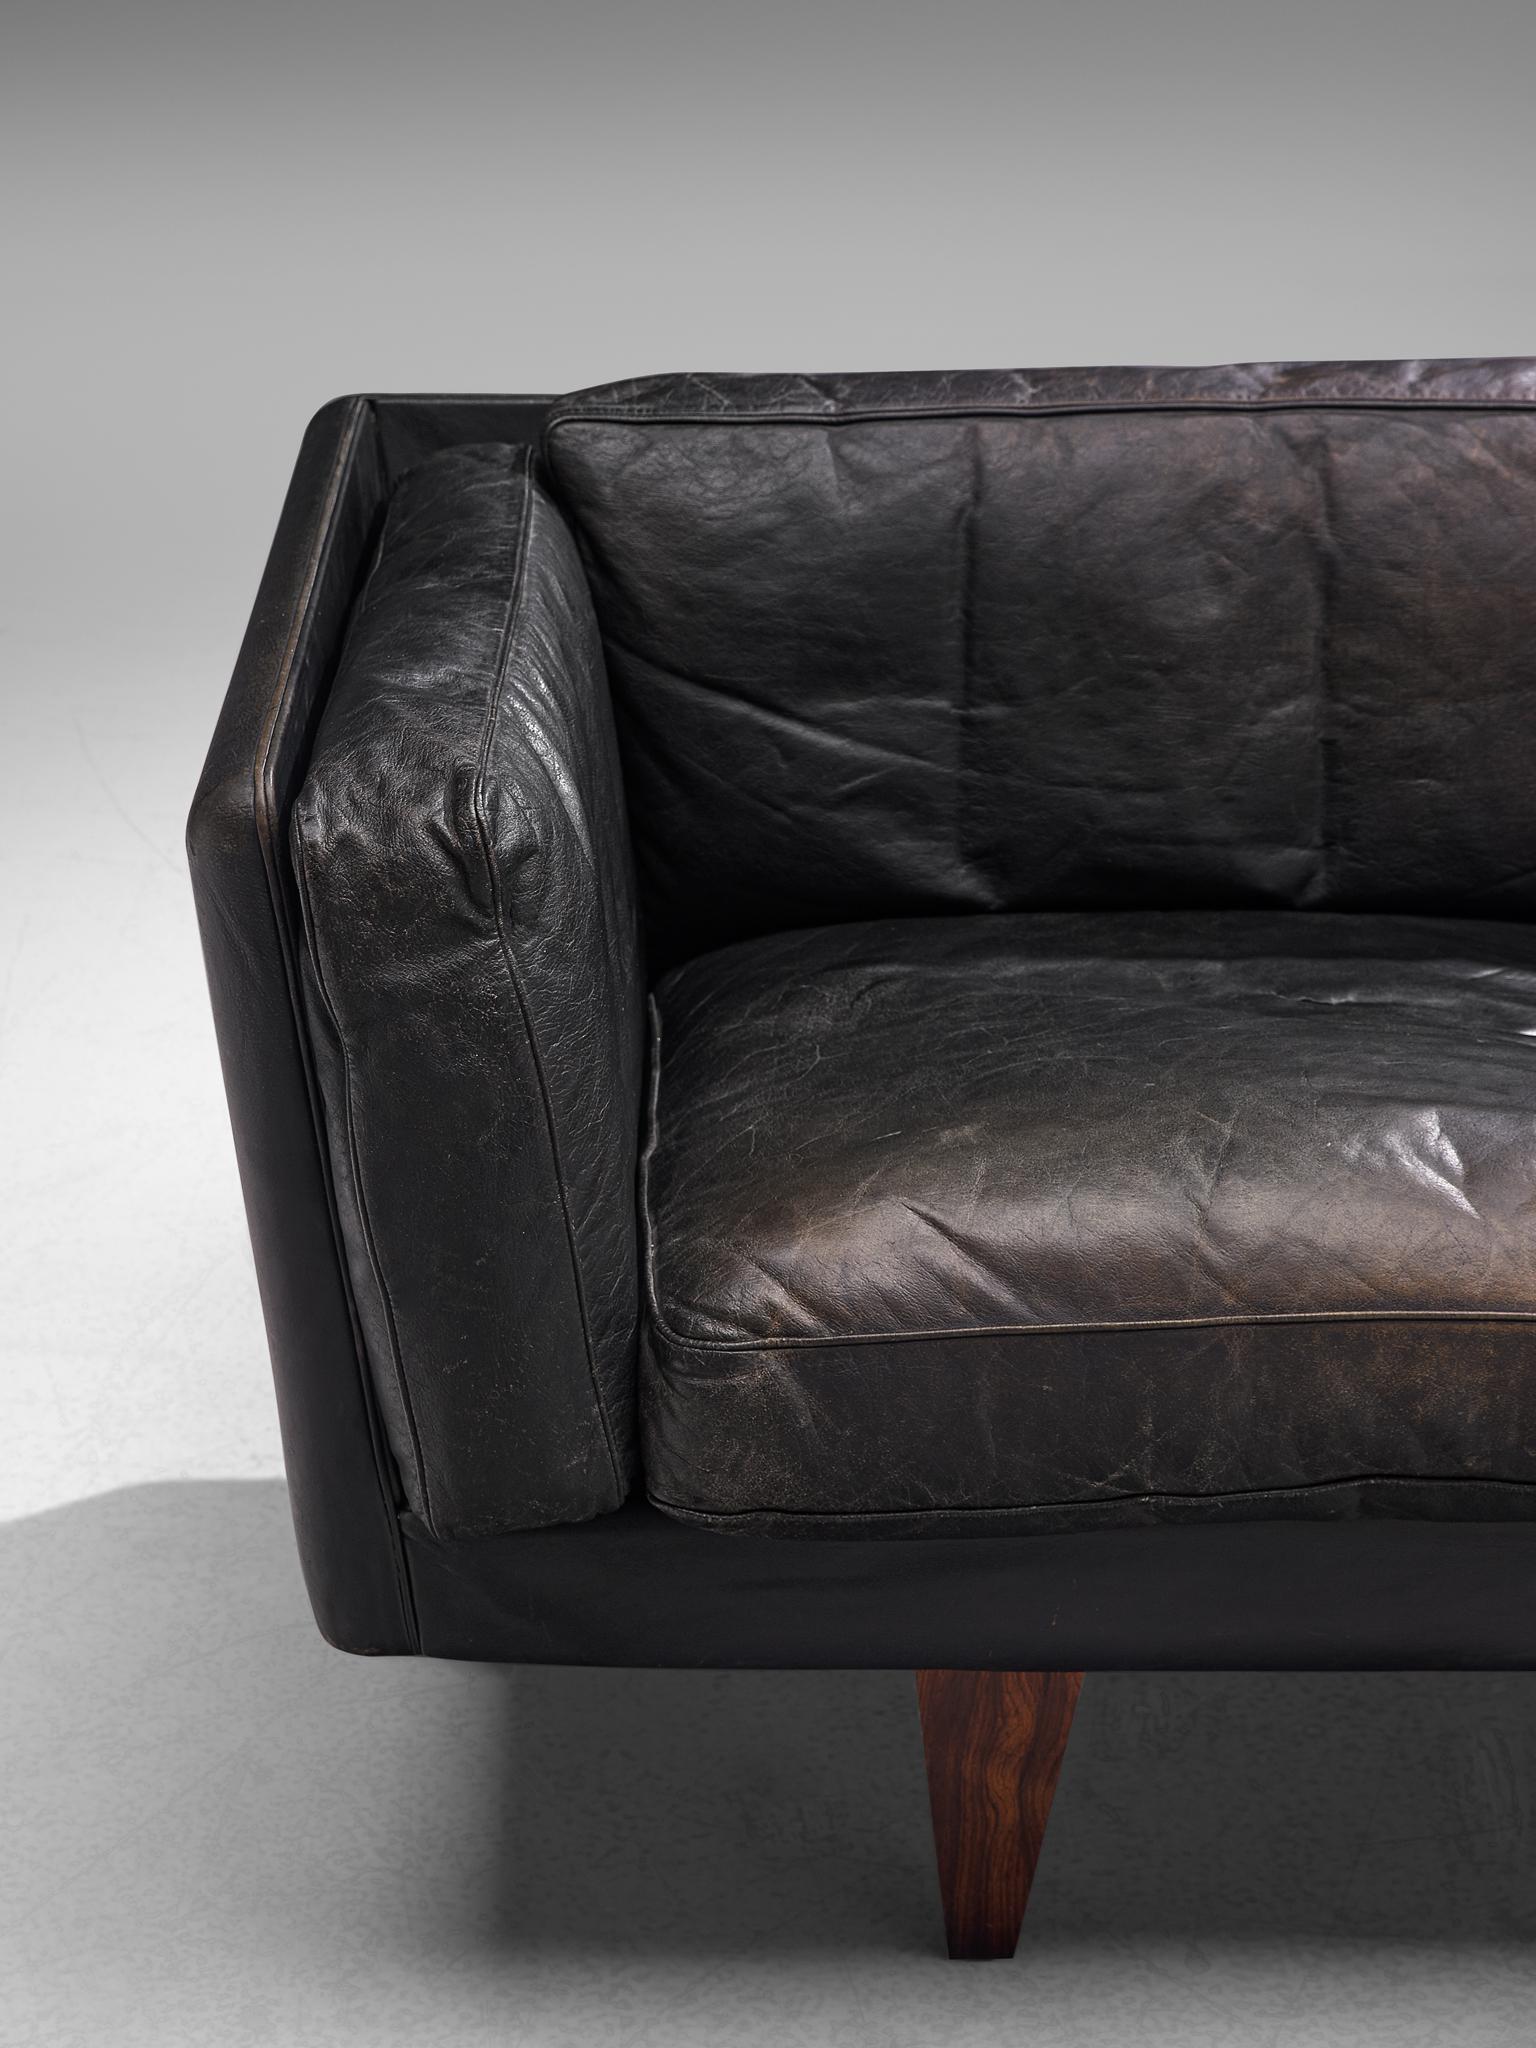 Illum Wikkelsø Restored and Patinated 'V11' Sofa in Black Leather 2